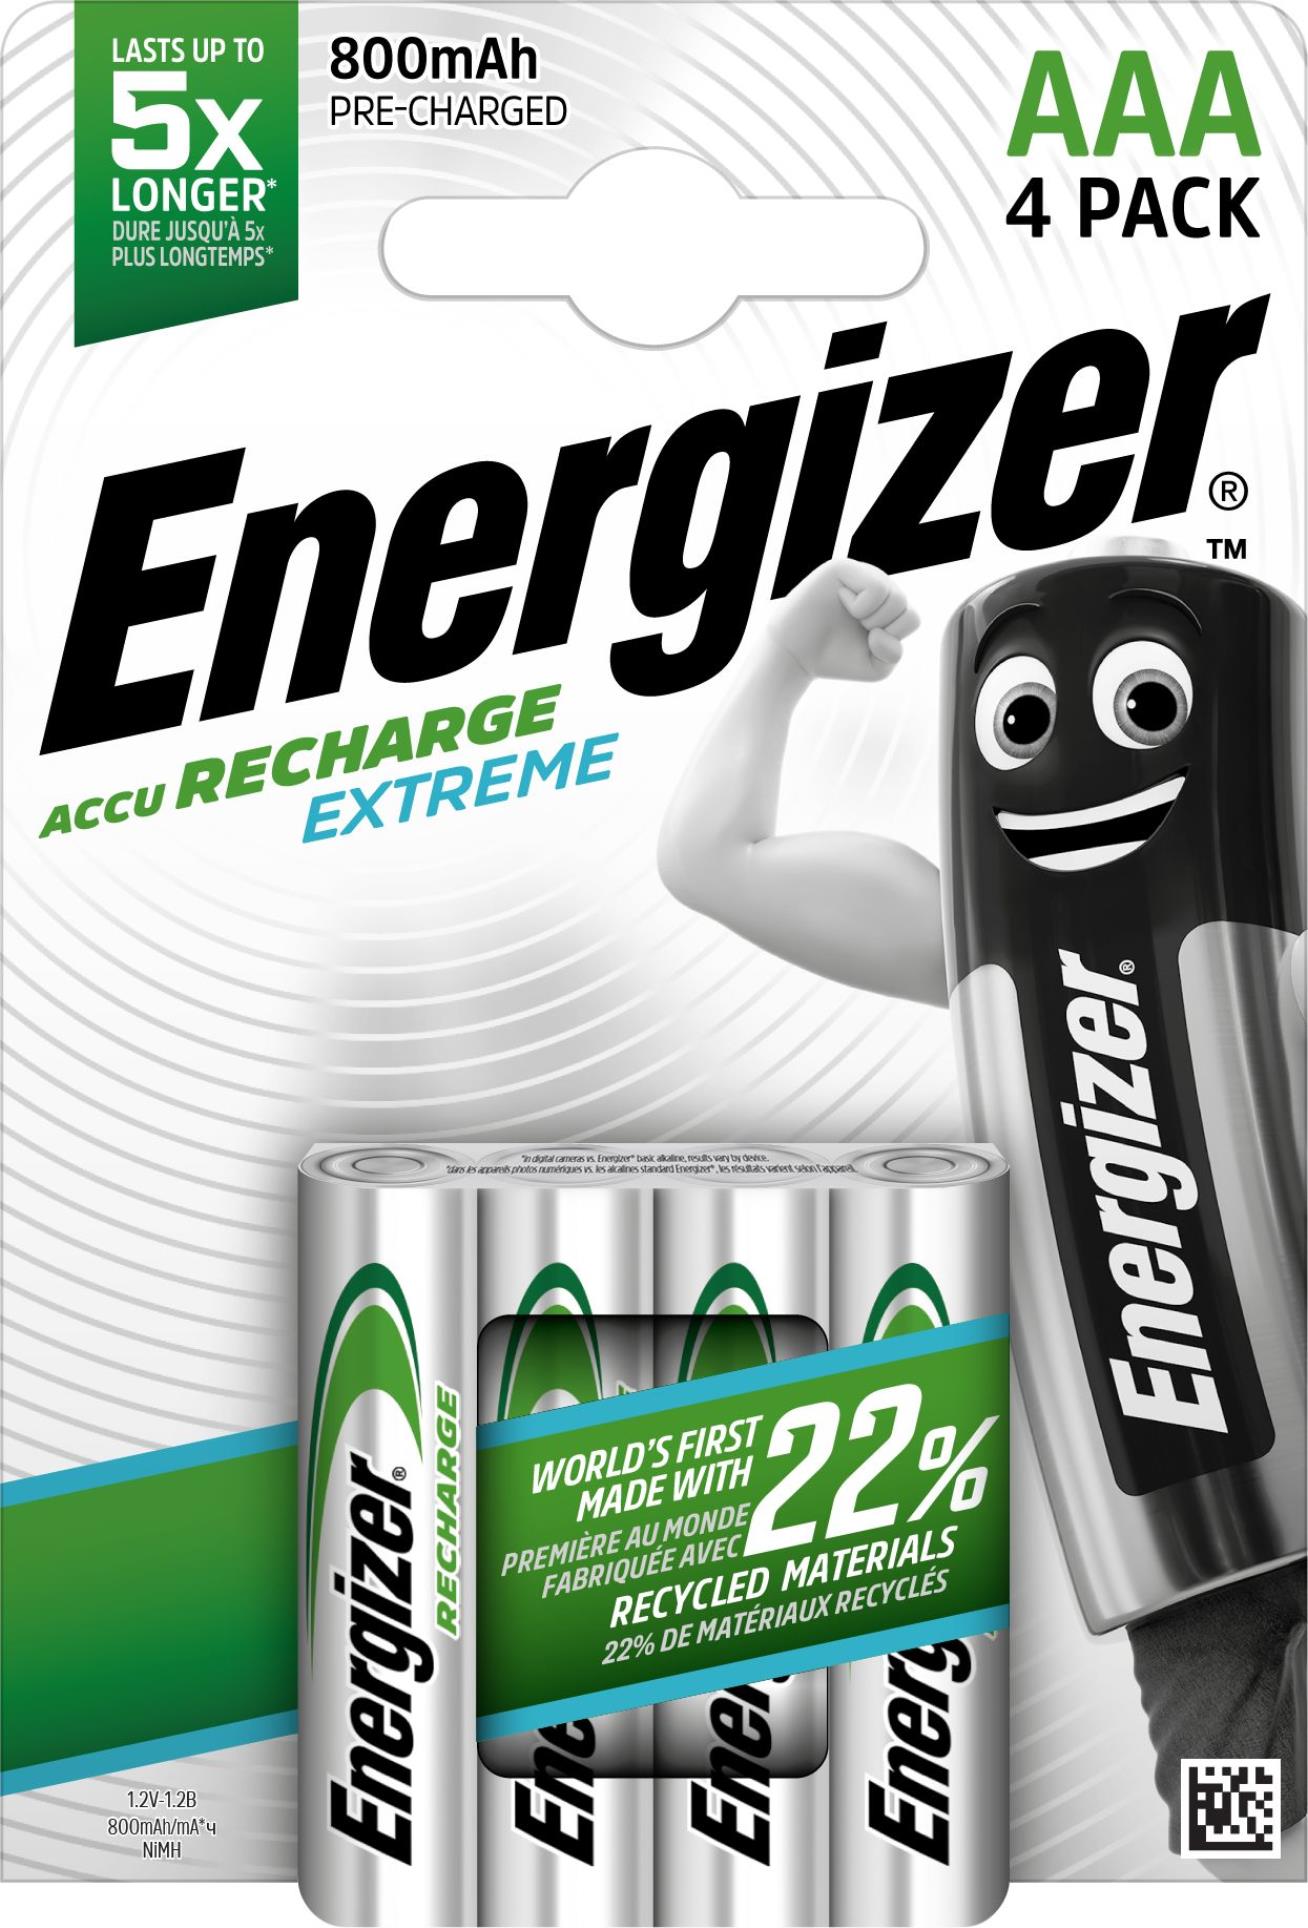 Baterie přednabité Energizer Extreme - 1,2 V, typ AAA